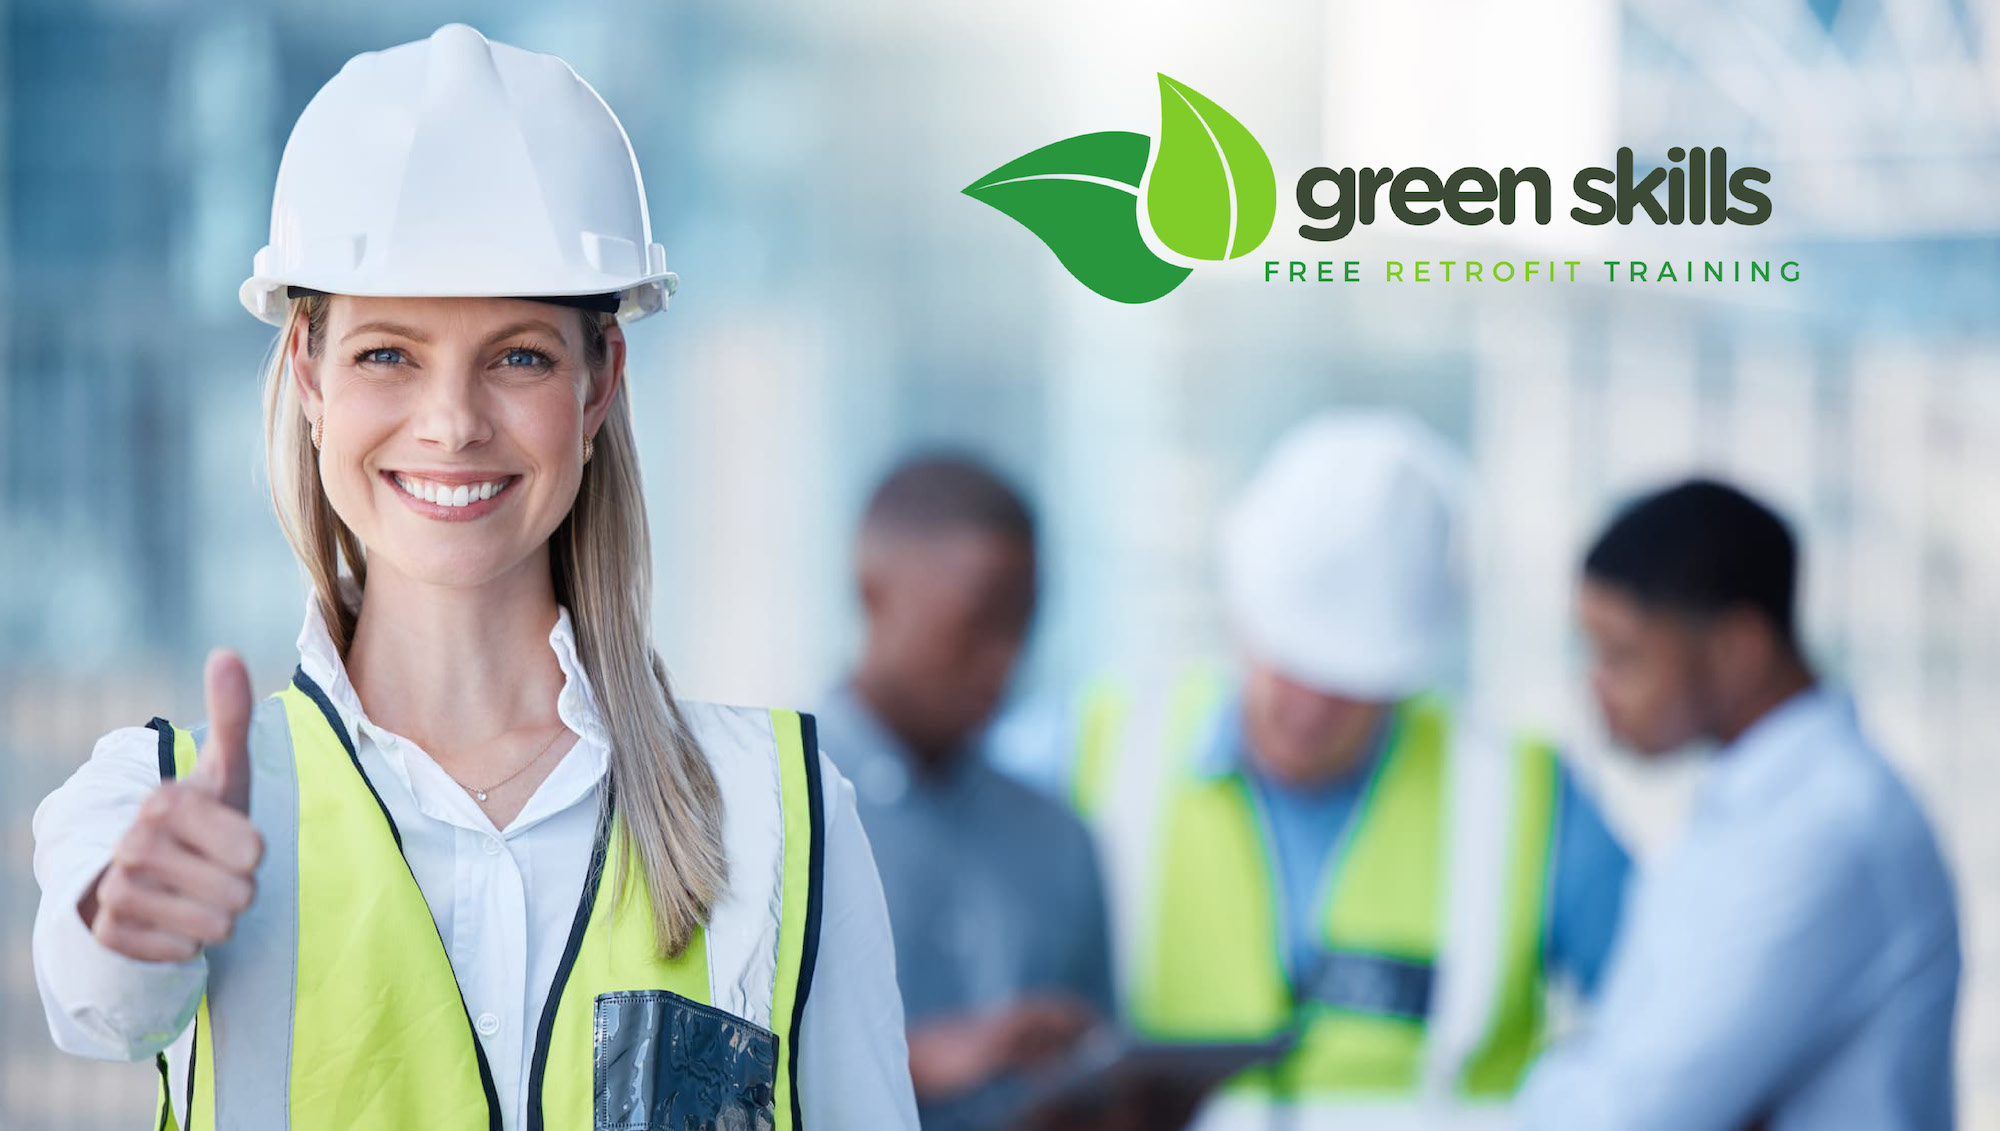 Green skills free training image